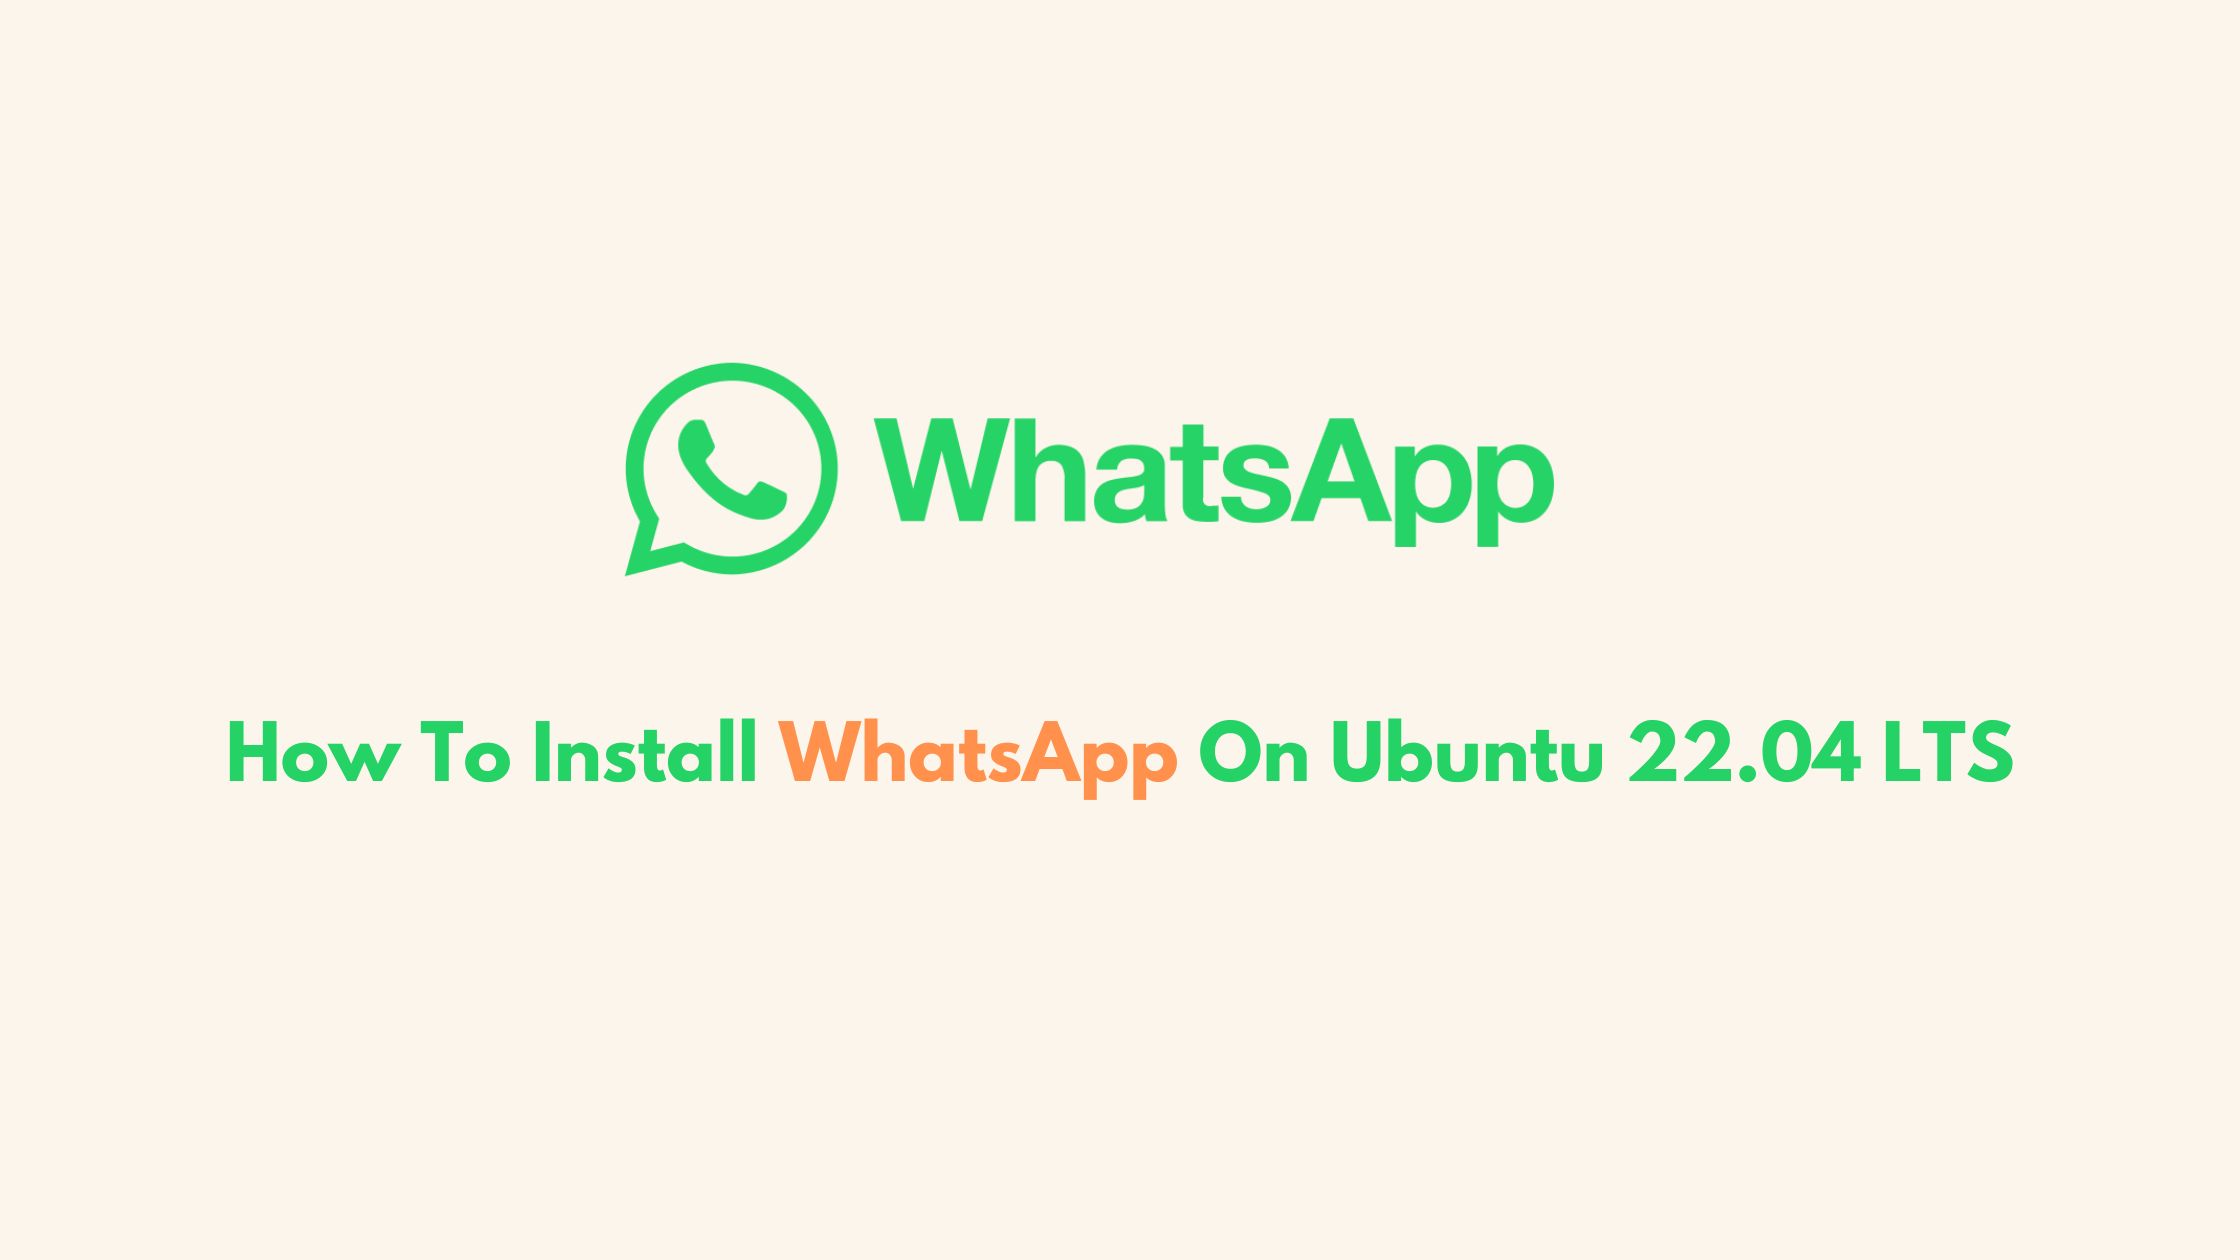 How To Install WhatsApp On Ubuntu 22.04 LTS